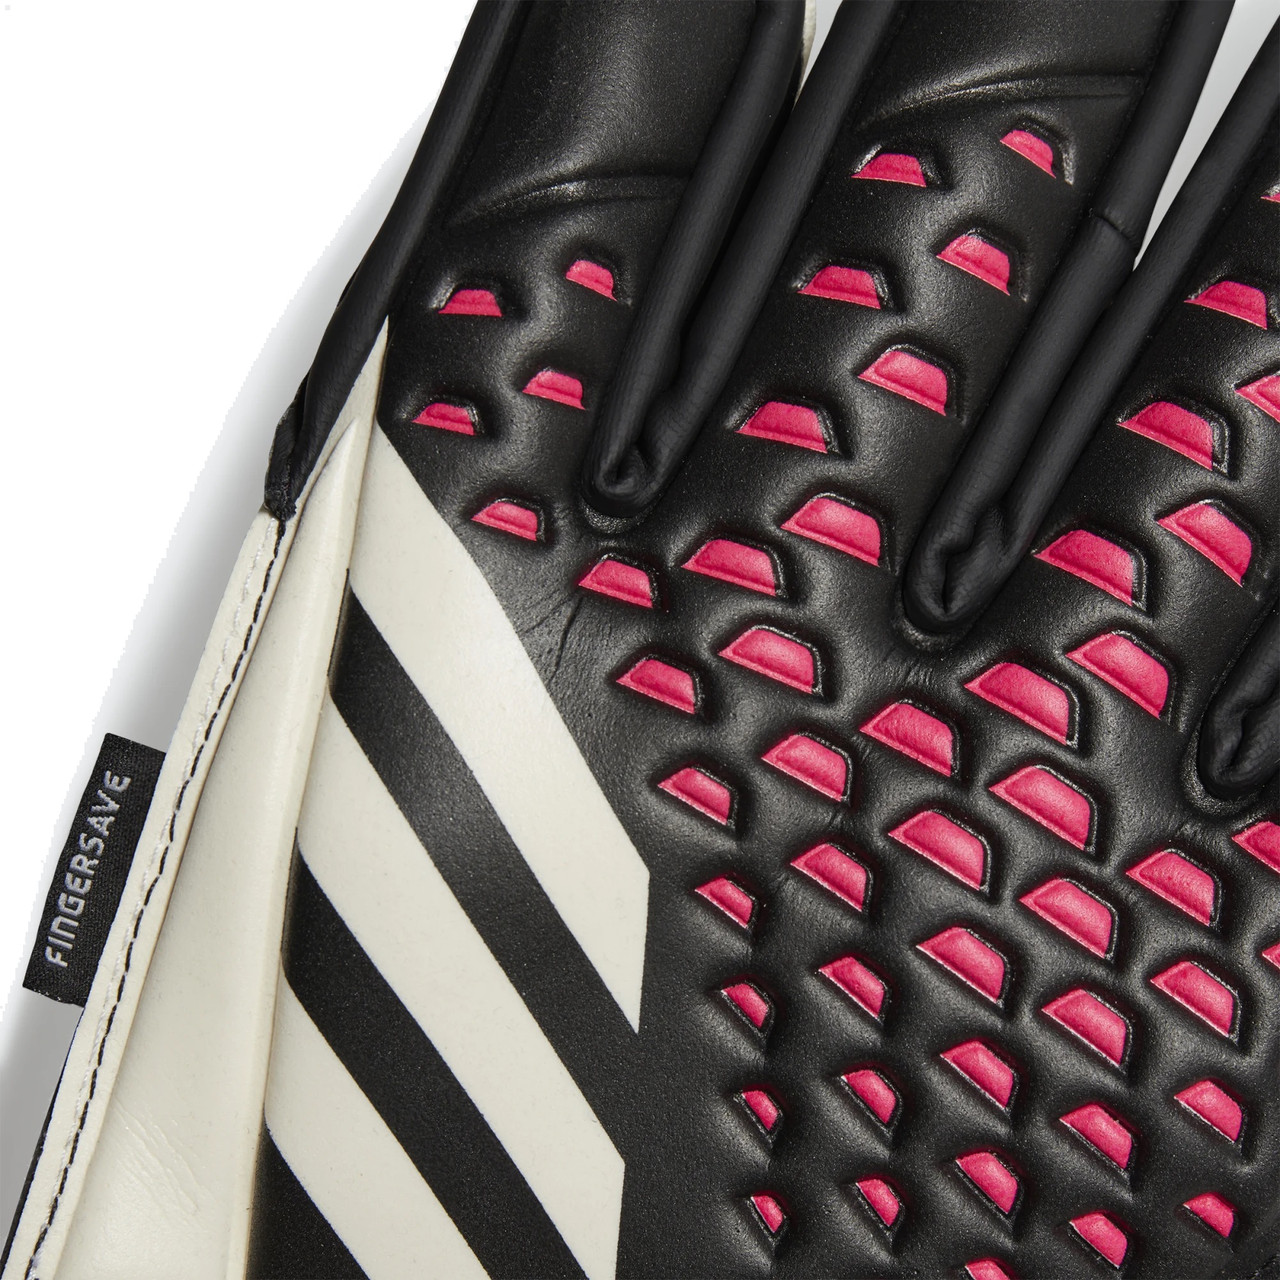 adidas Predator Edge Fingersave Match GK Gloves - Black/White/Pink